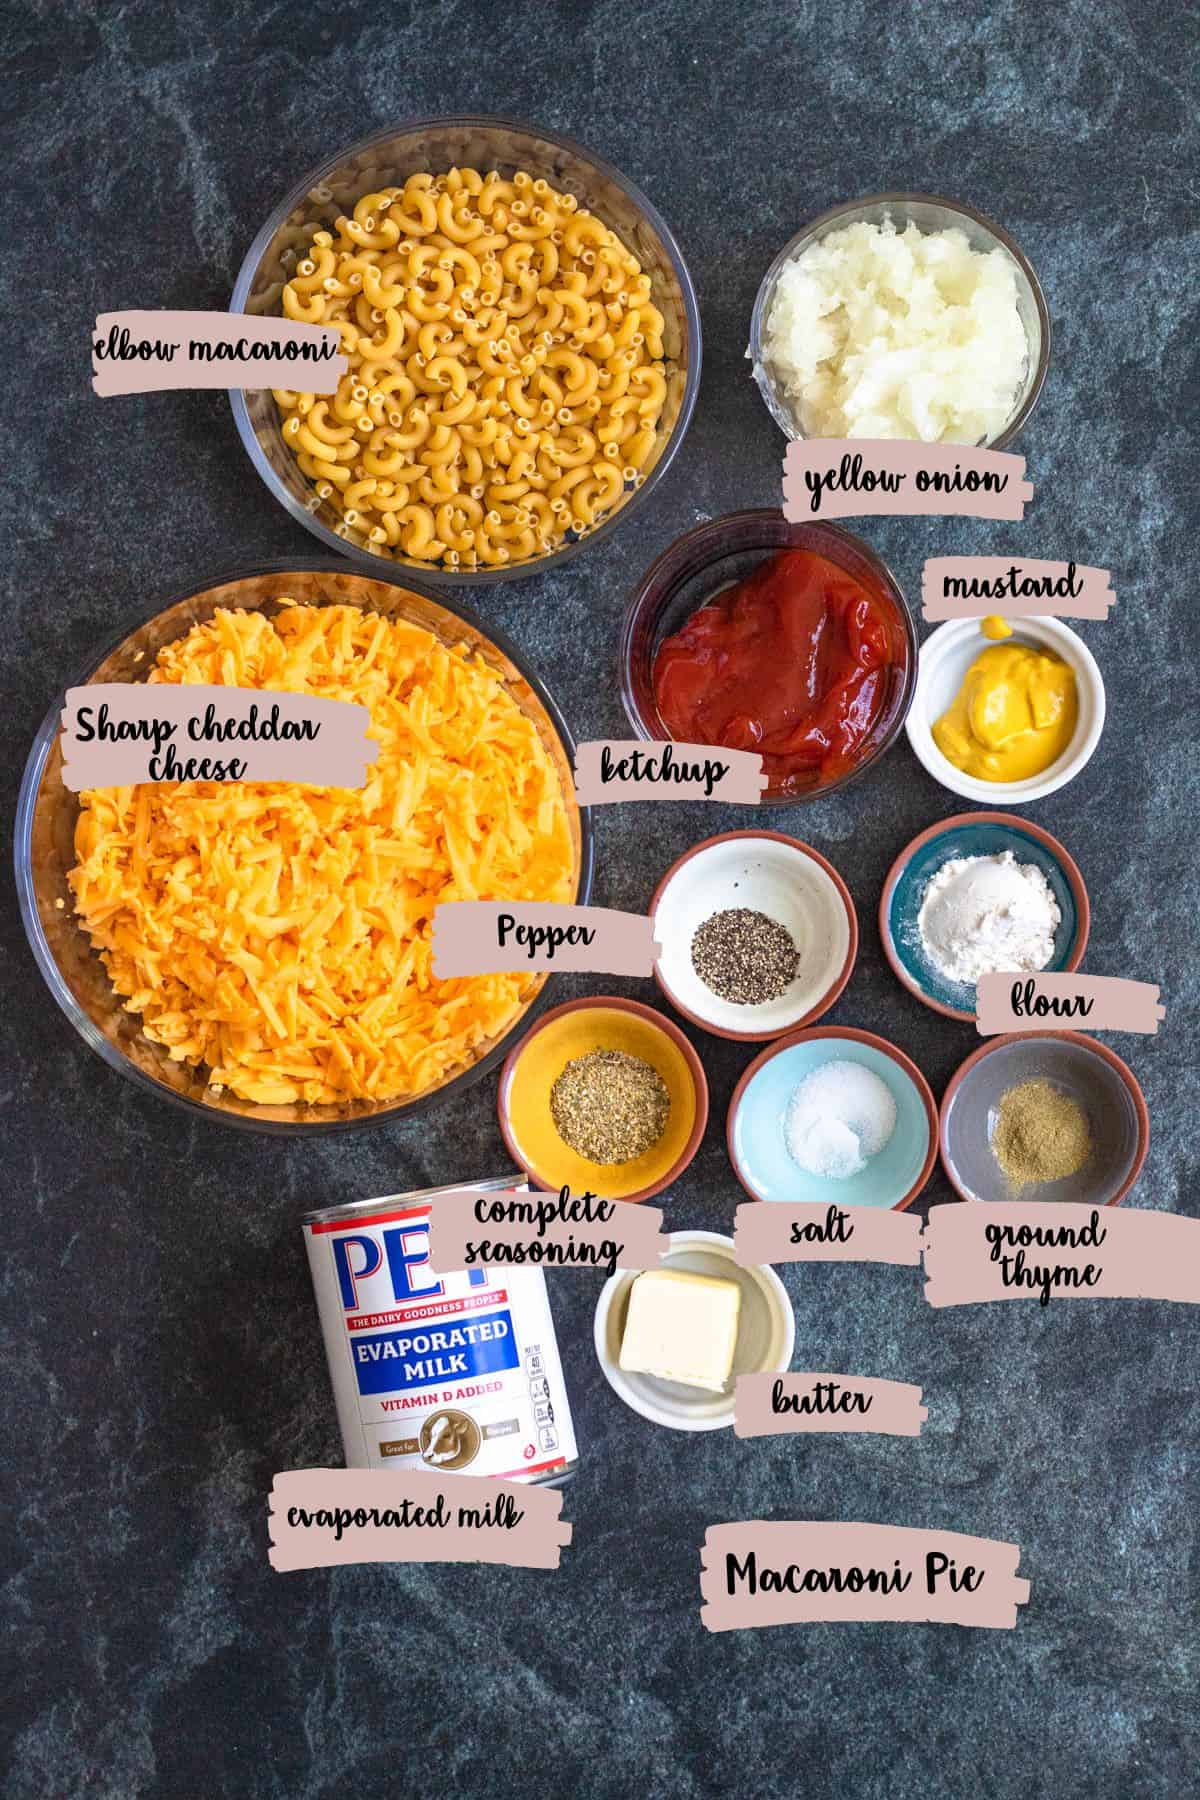 Ingredients shown are used to prepare Macaroni pie recipe. 